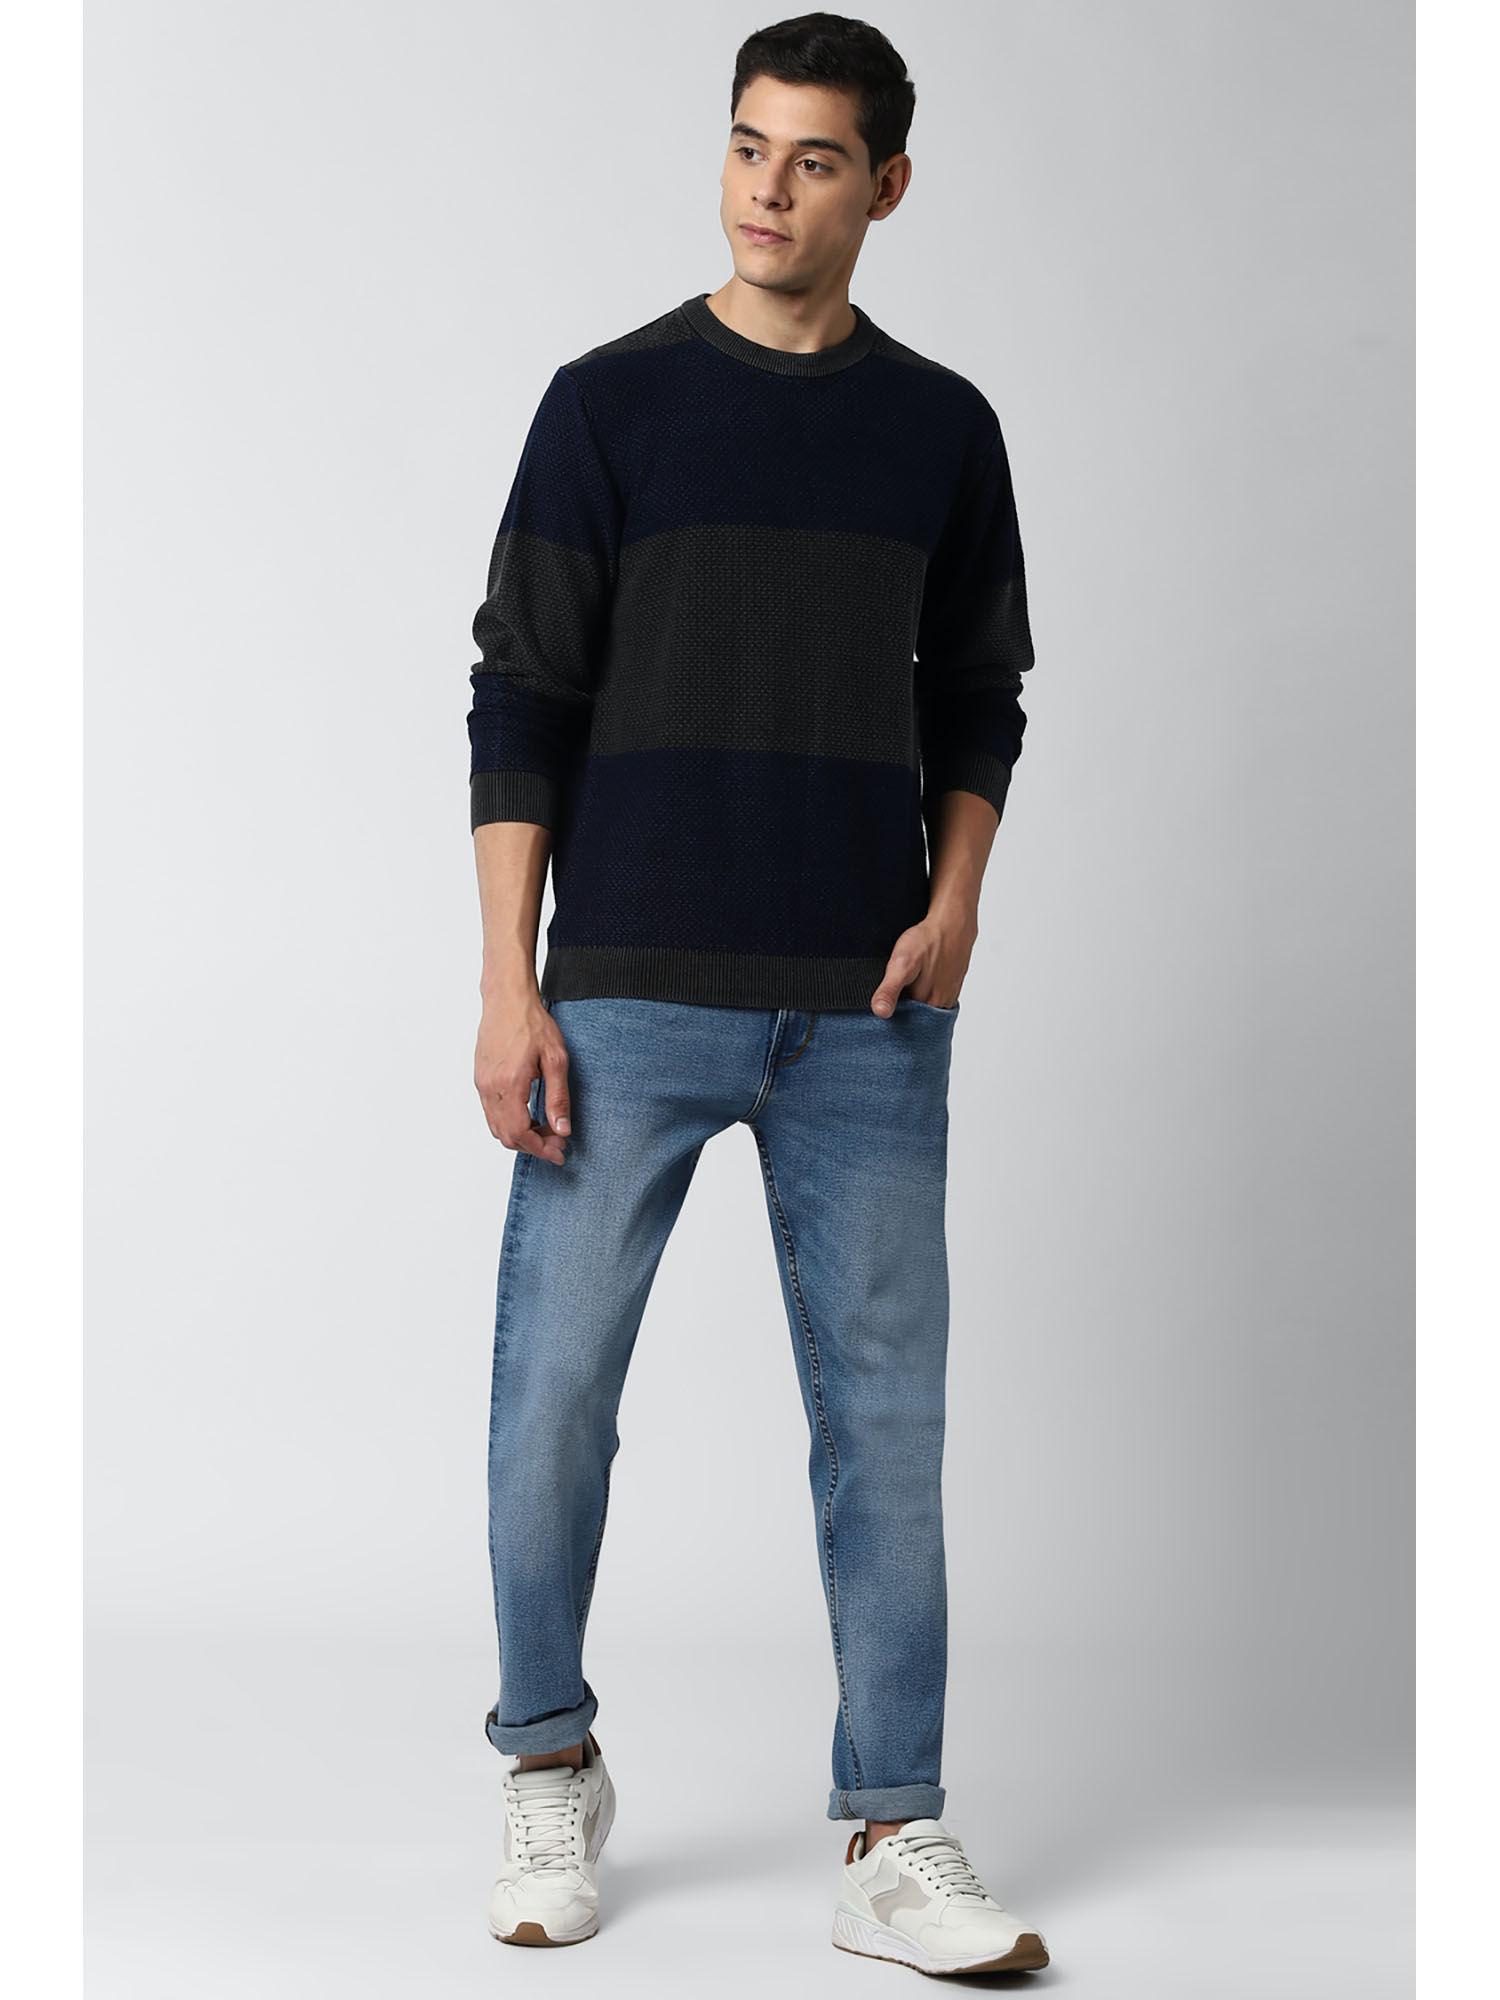 navy blue sweater